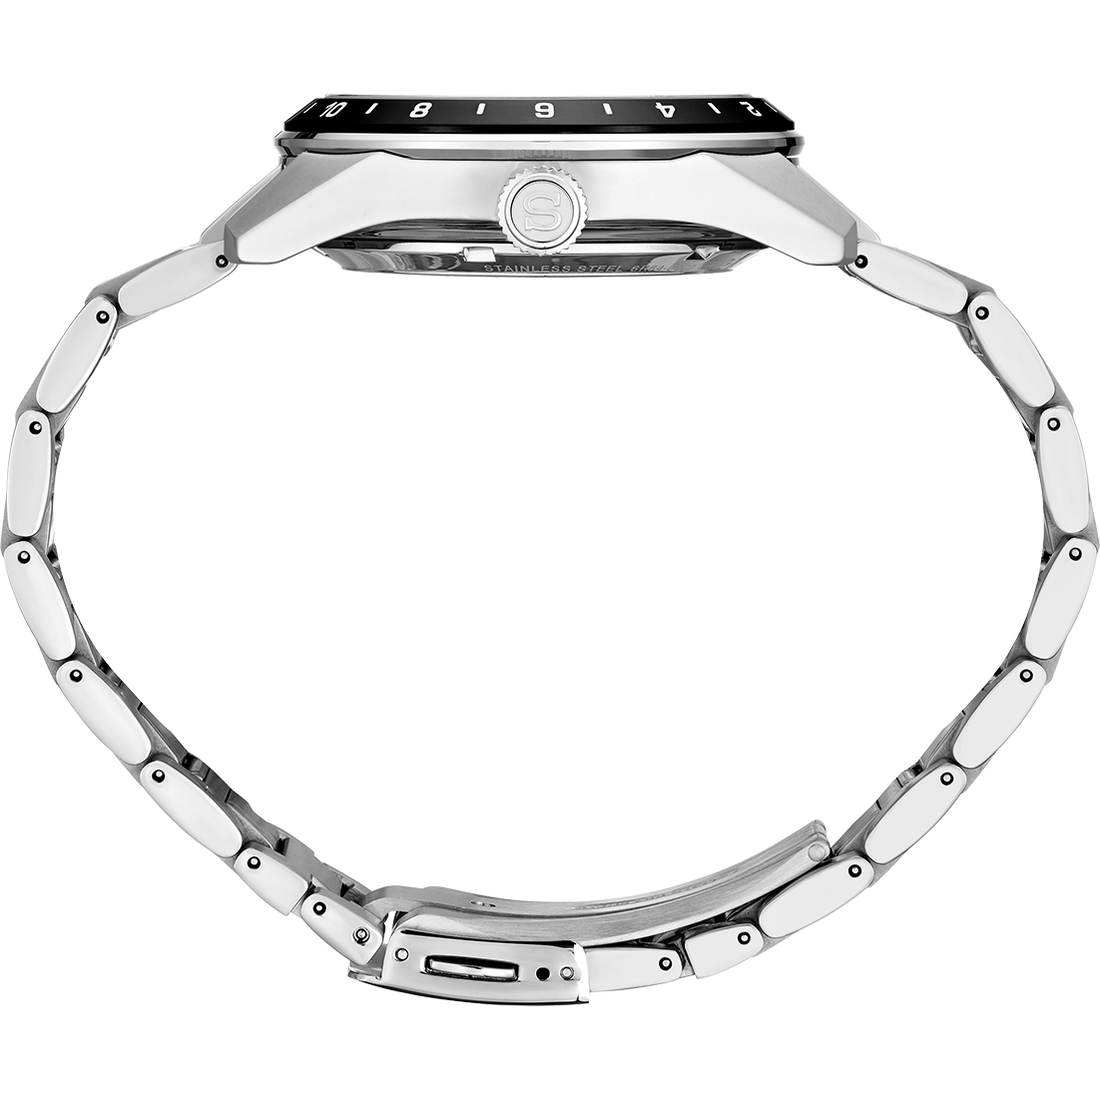 Seiko SPB221 Presage GMT 42.2mm Black Dial Watch